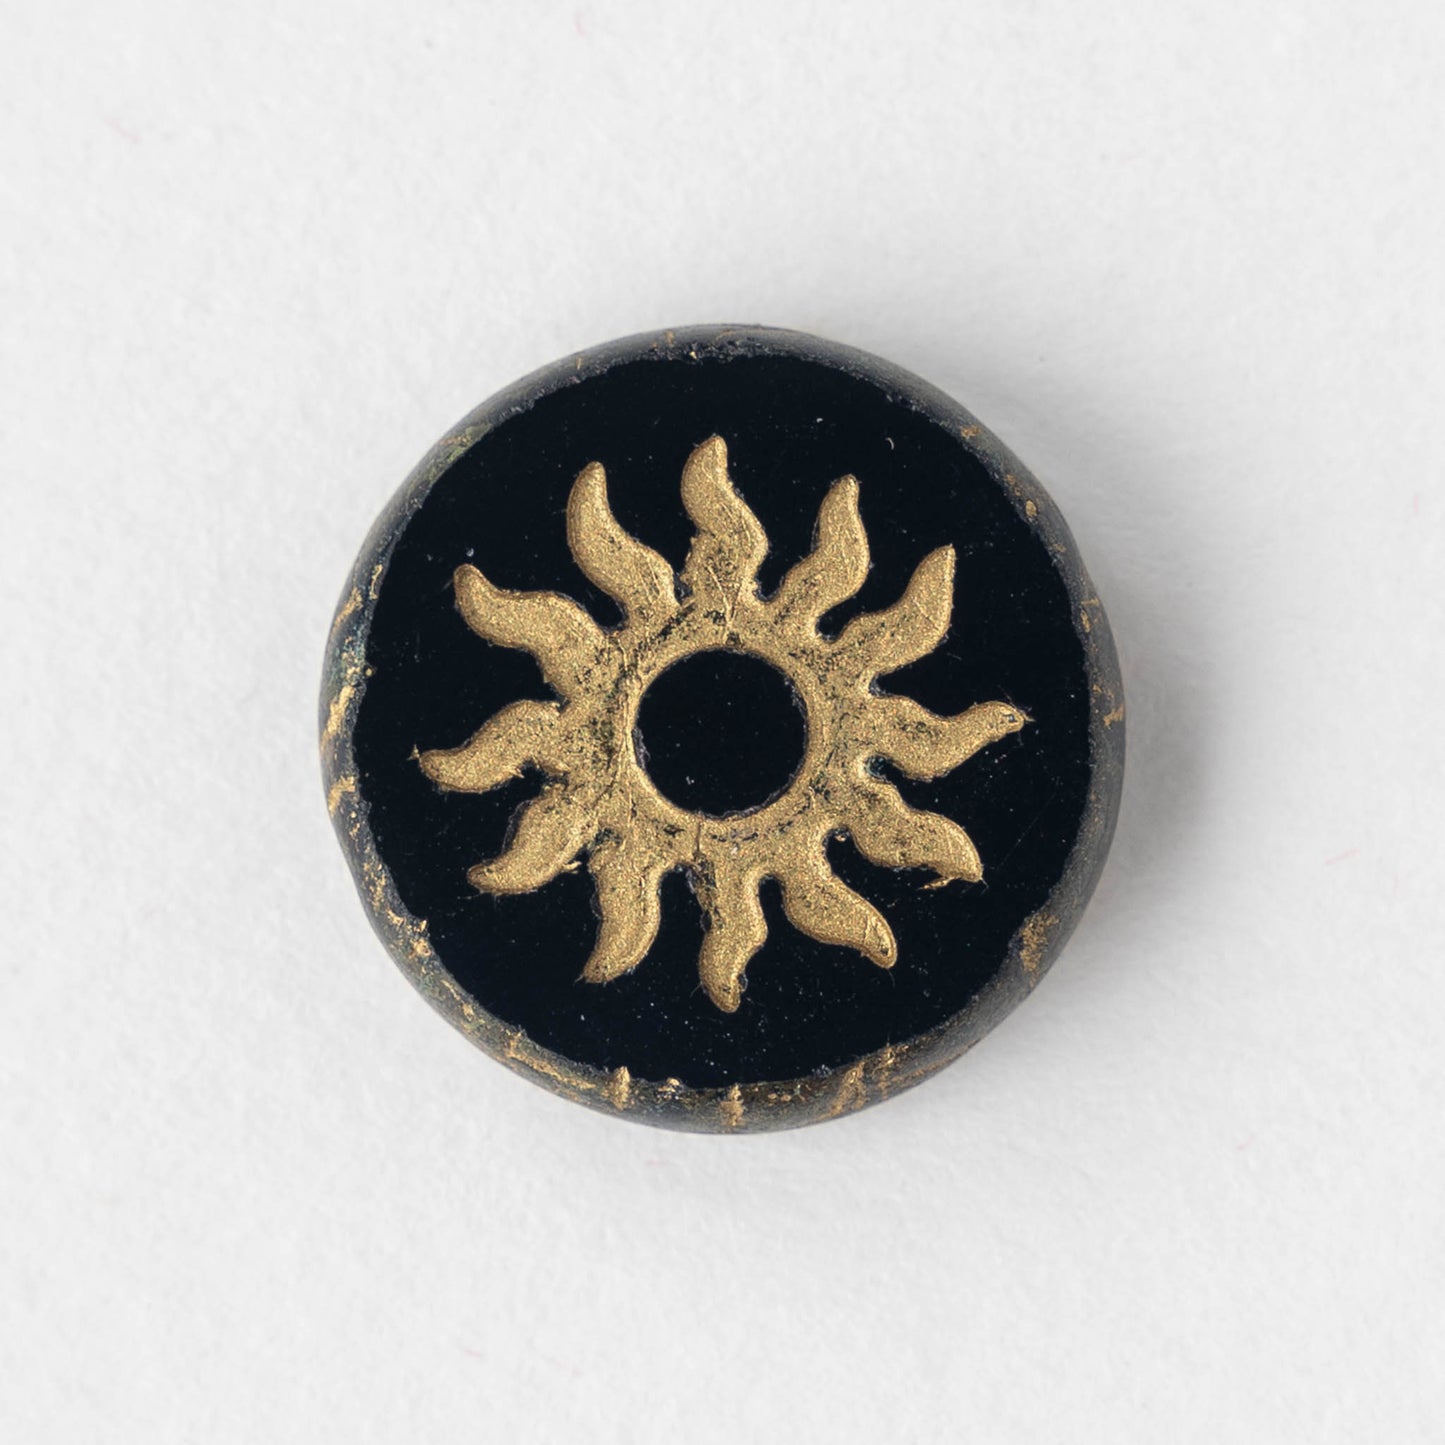 20mm Sun Coin Beads - Black - 1 bead